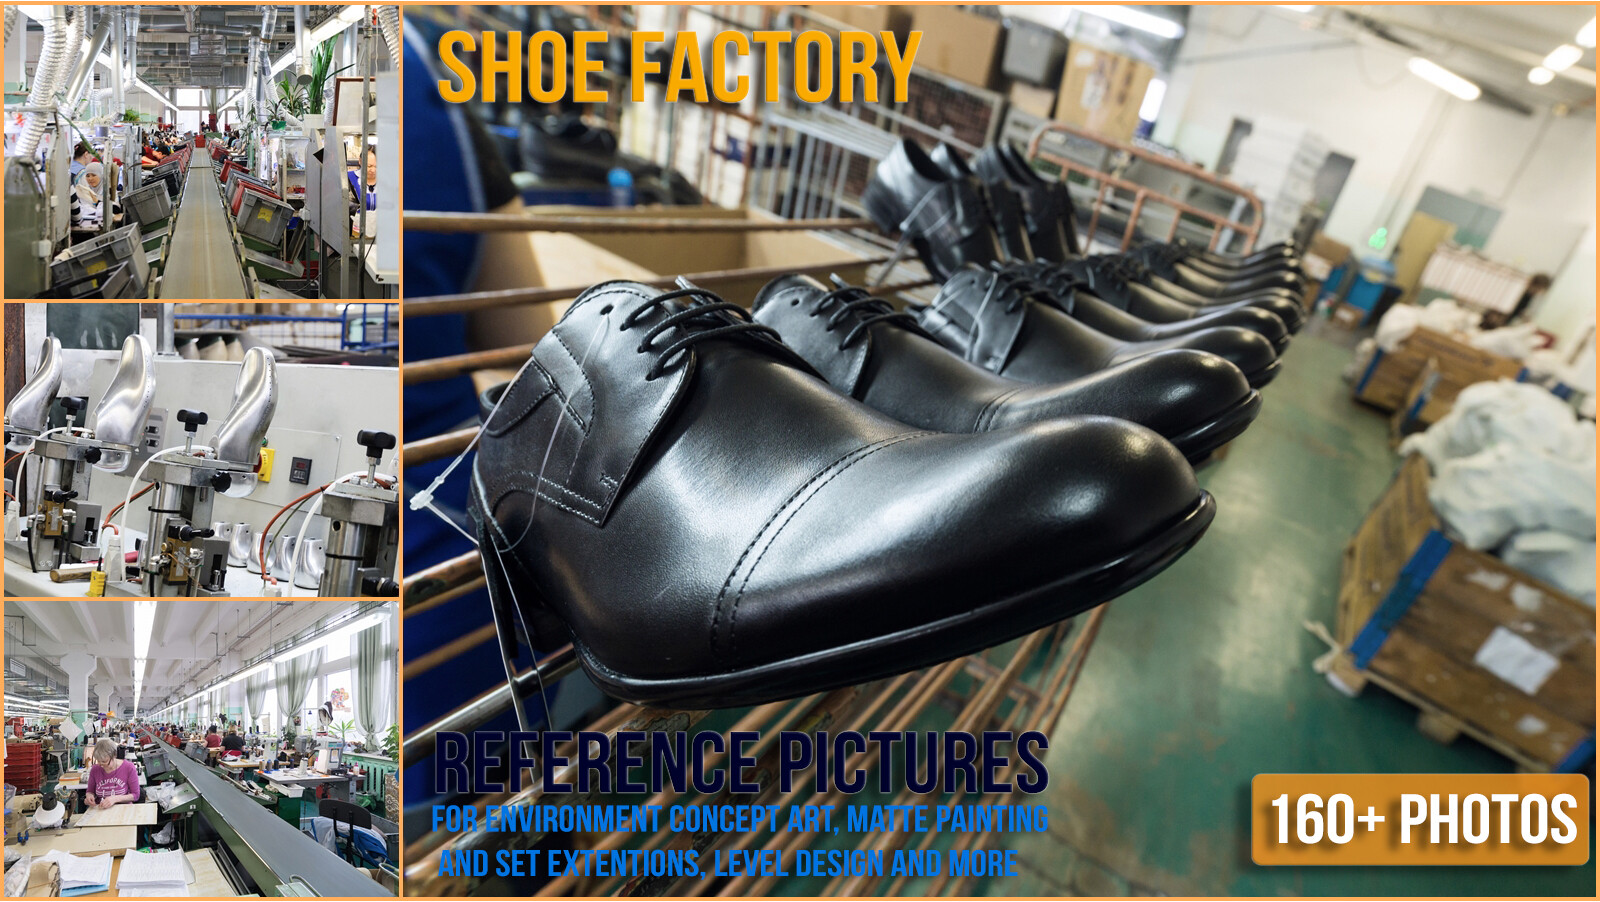 ArtStation - 160 Photos Shoe factory | Resources